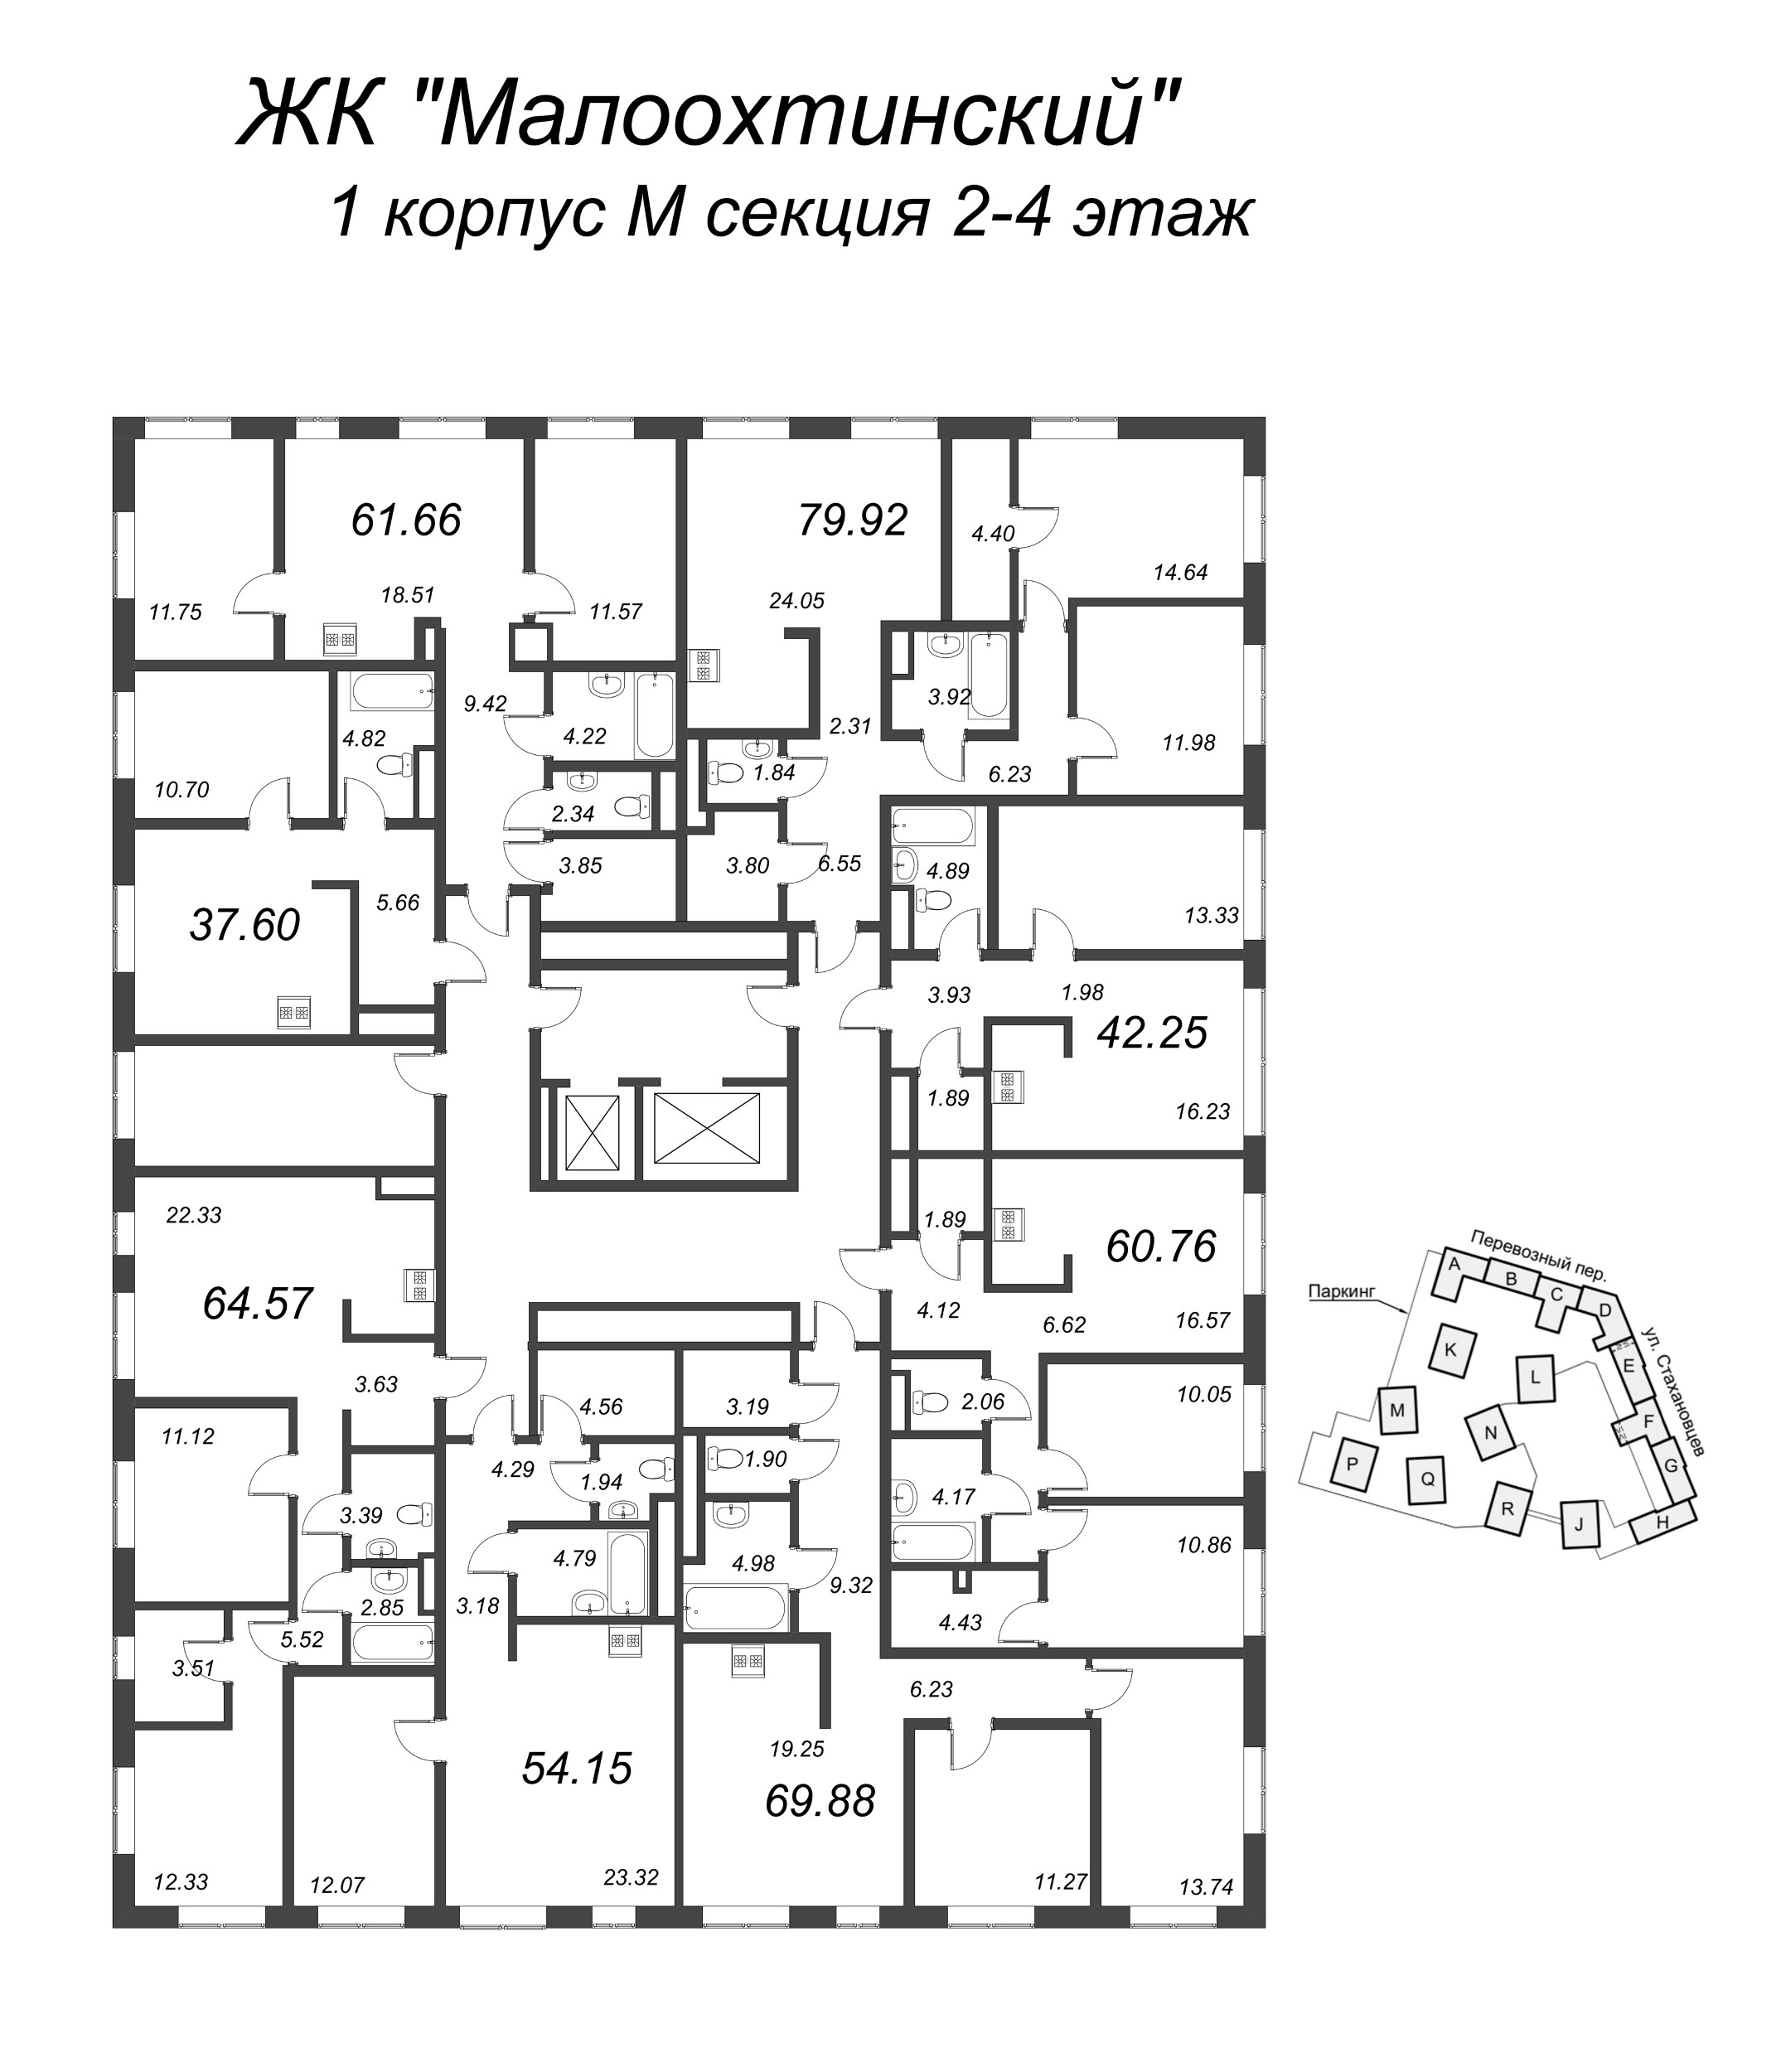 3-комнатная (Евро) квартира, 71.9 м² - планировка этажа